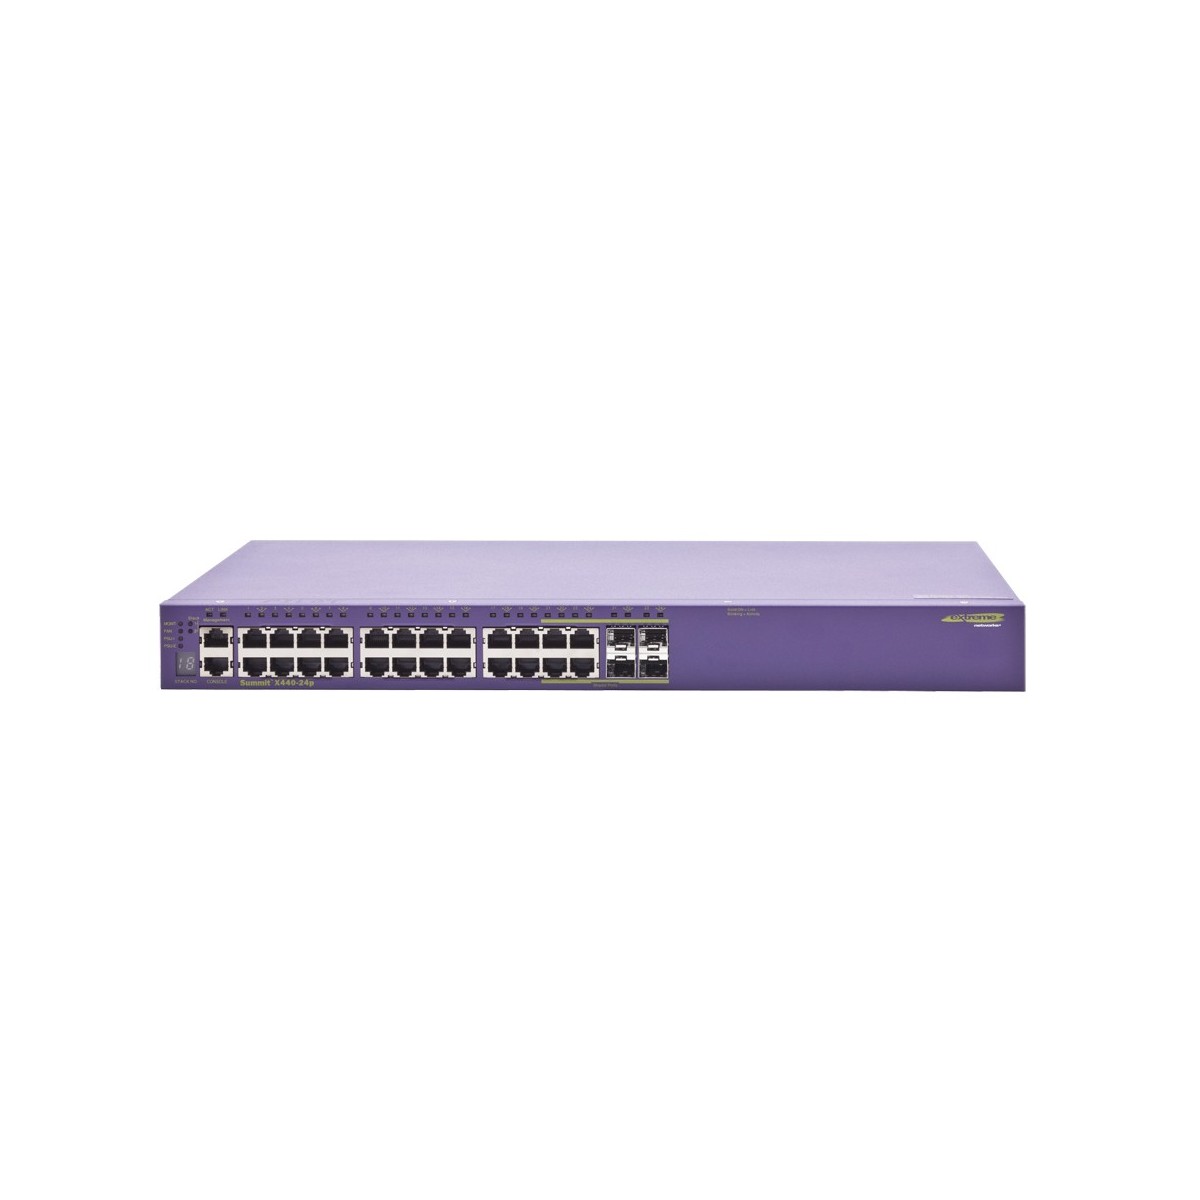 Extreme Networks Summit X440-24p - Managed - L2/L3 - Gigabit Ethernet (10/100/1000) - Power over Ethernet (PoE) - Rack mounting 